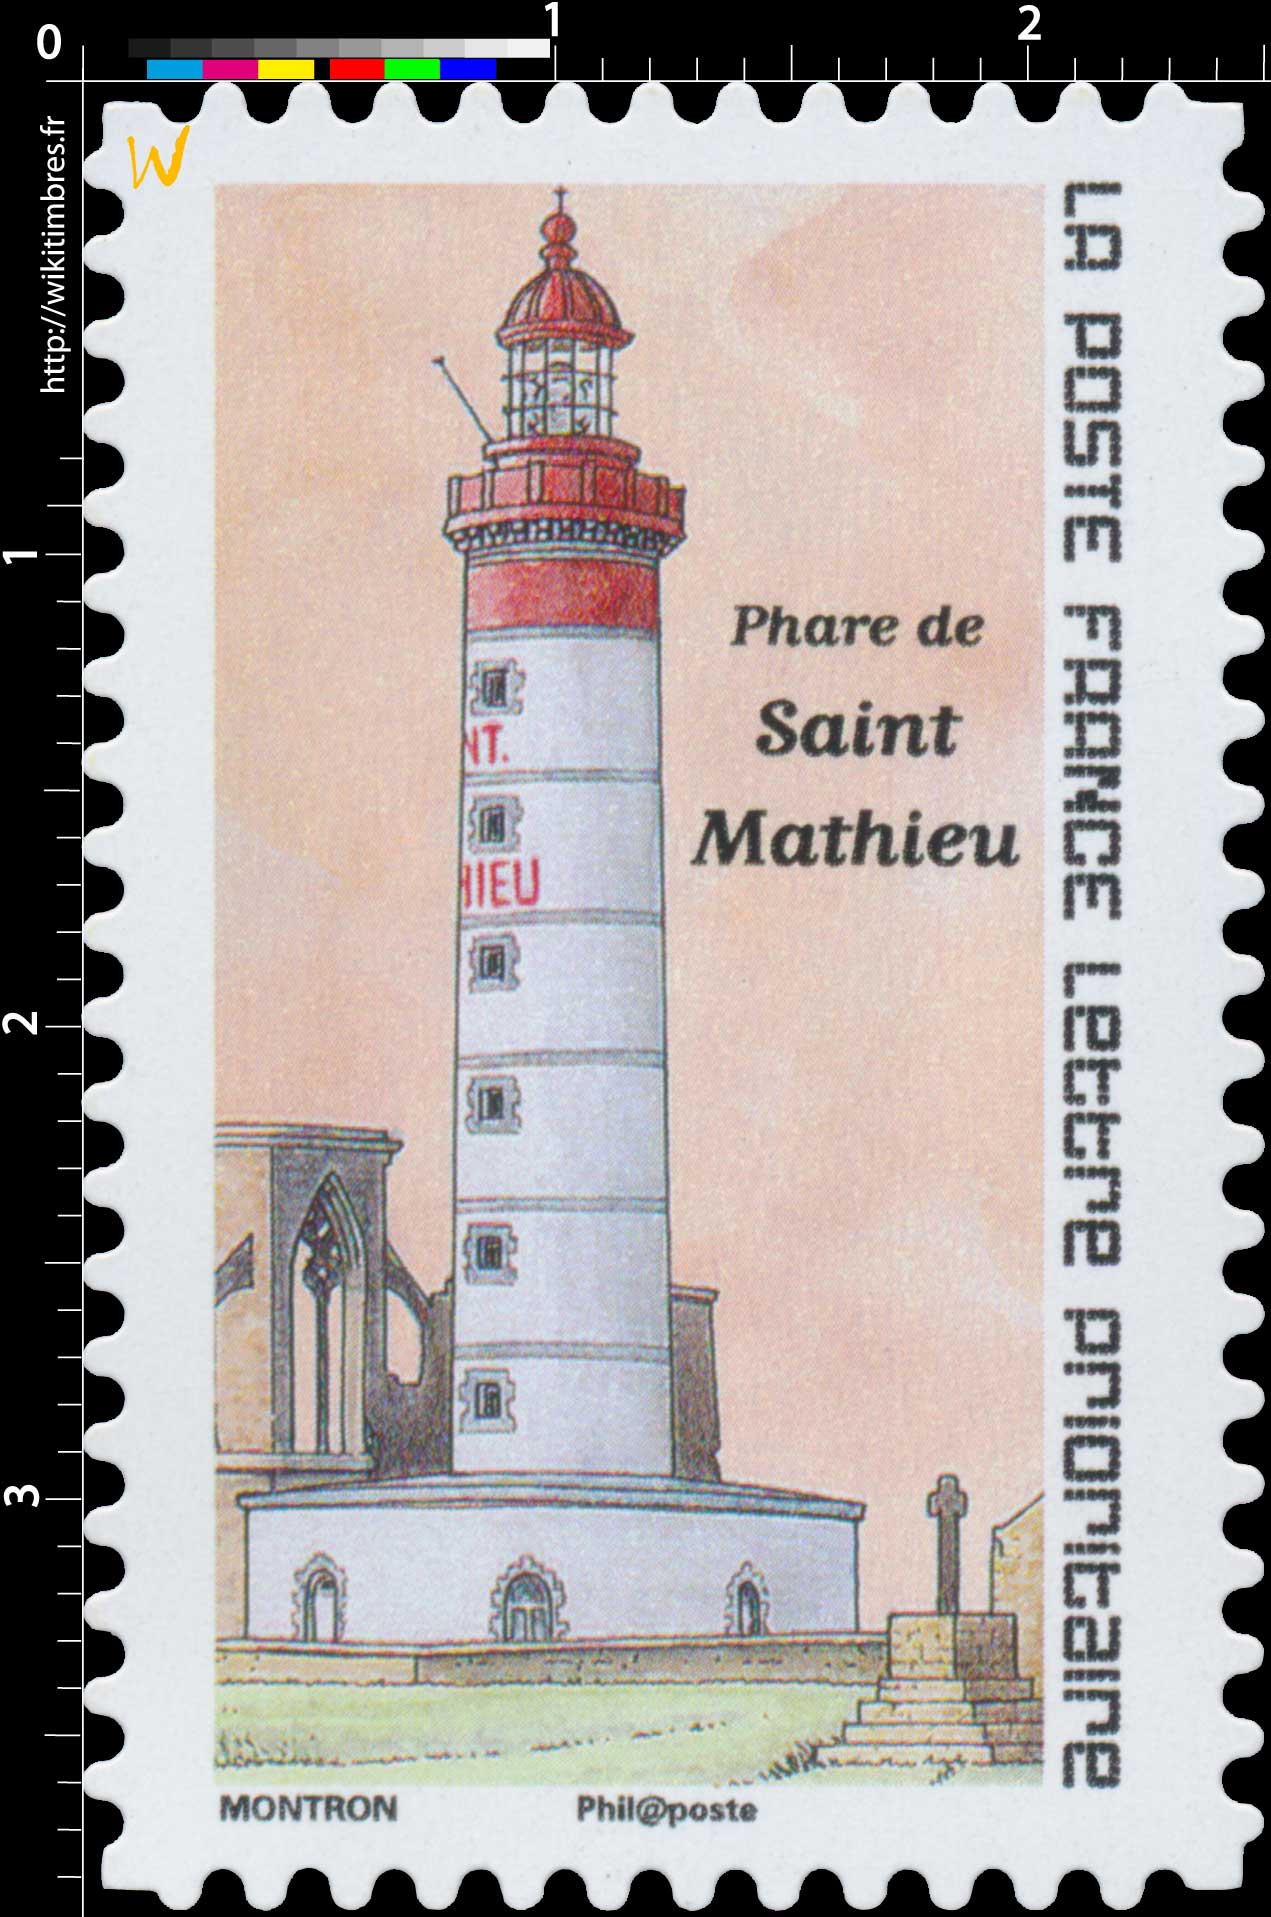 2020 Phare de Saint Mathieu